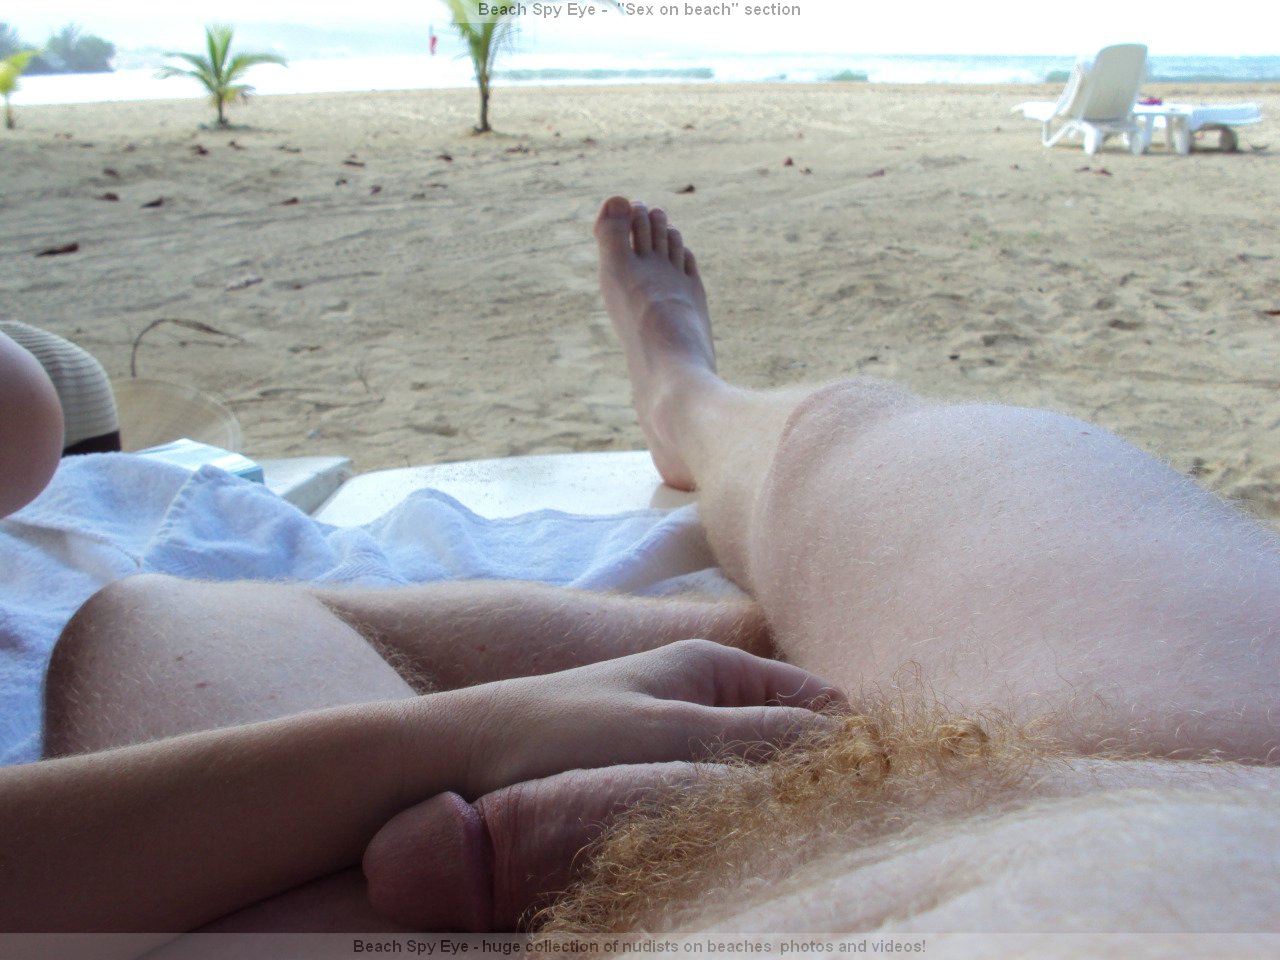 Nude Beaches Pics Undress exceeding beaches - Roused naturist.. Image 8